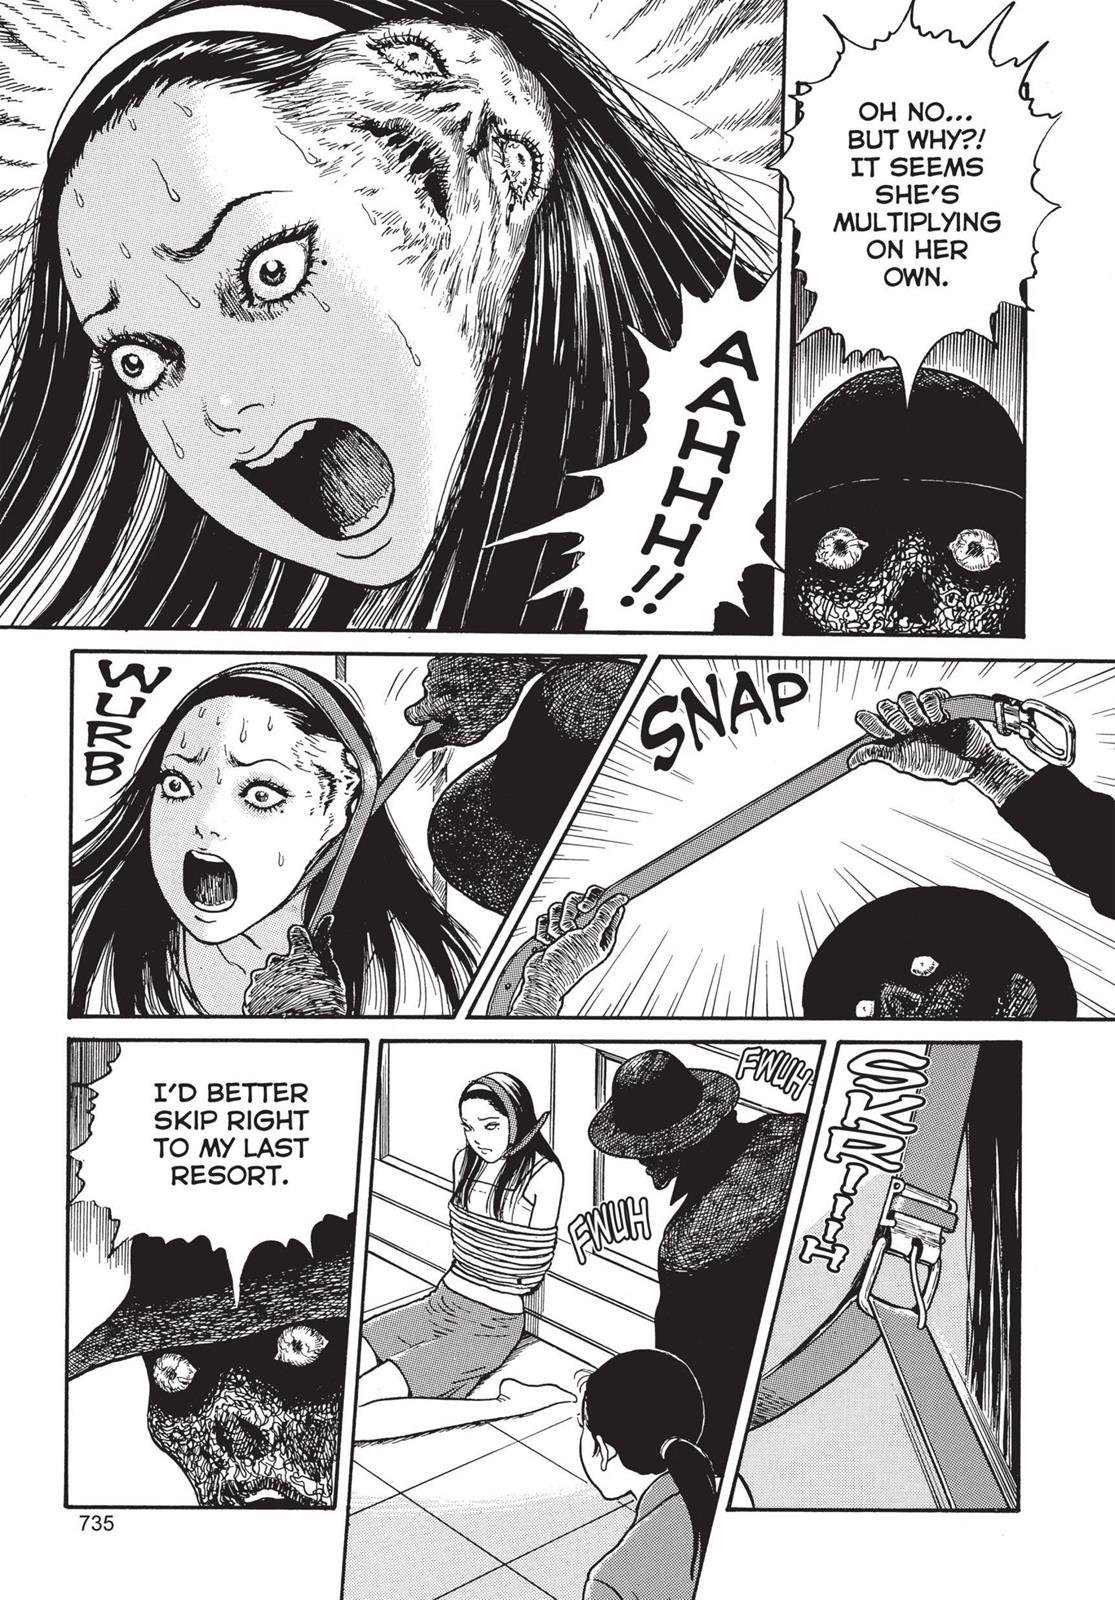 Top 30 Horror Manga GIFs  Find the best GIF on Gfycat